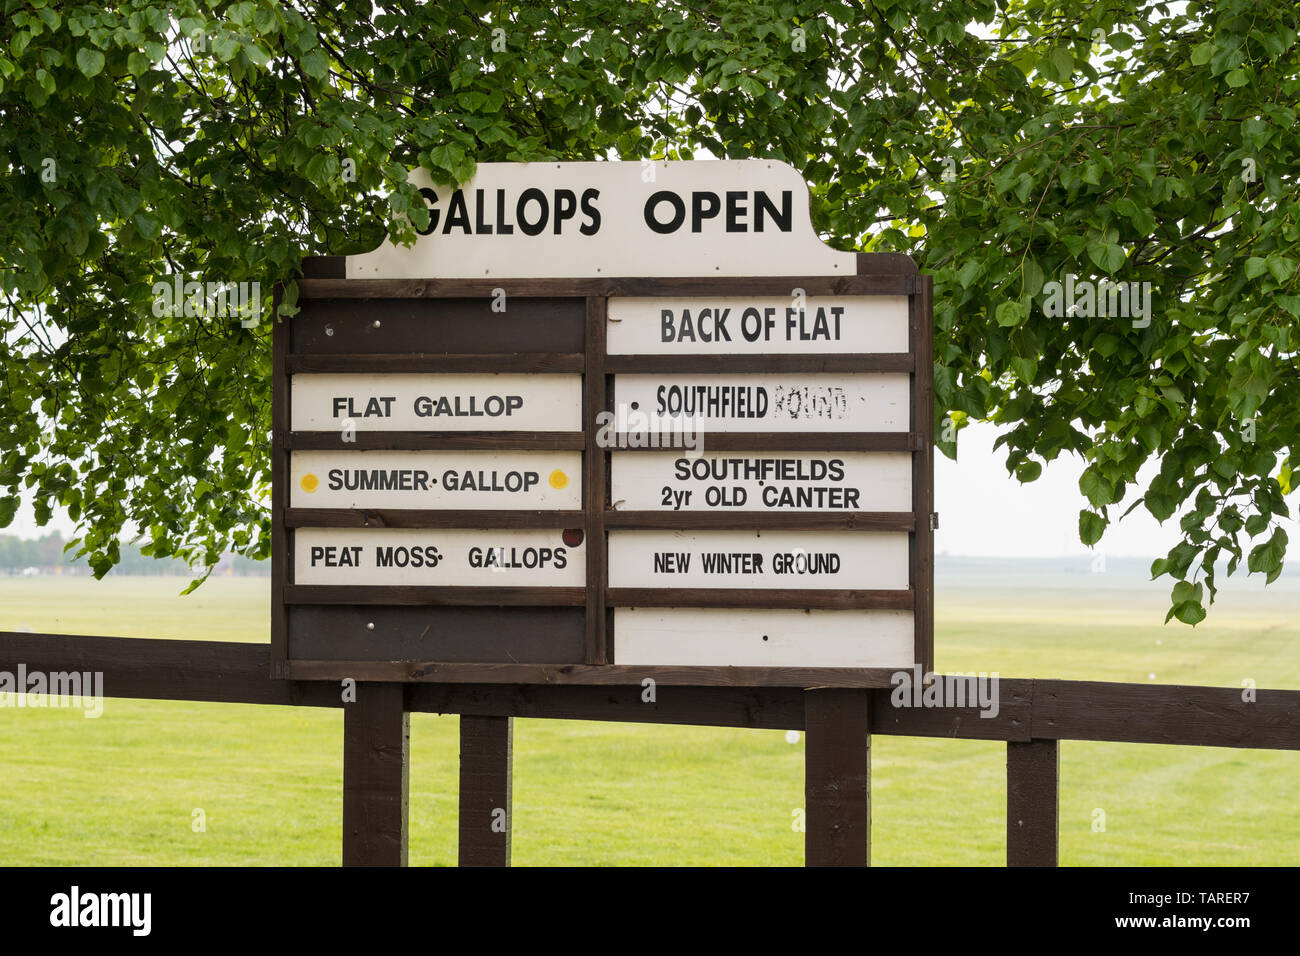 Galops Open sign à Newmarket Racecourse, Newmarket Heath, Newmarket, England, UK Banque D'Images